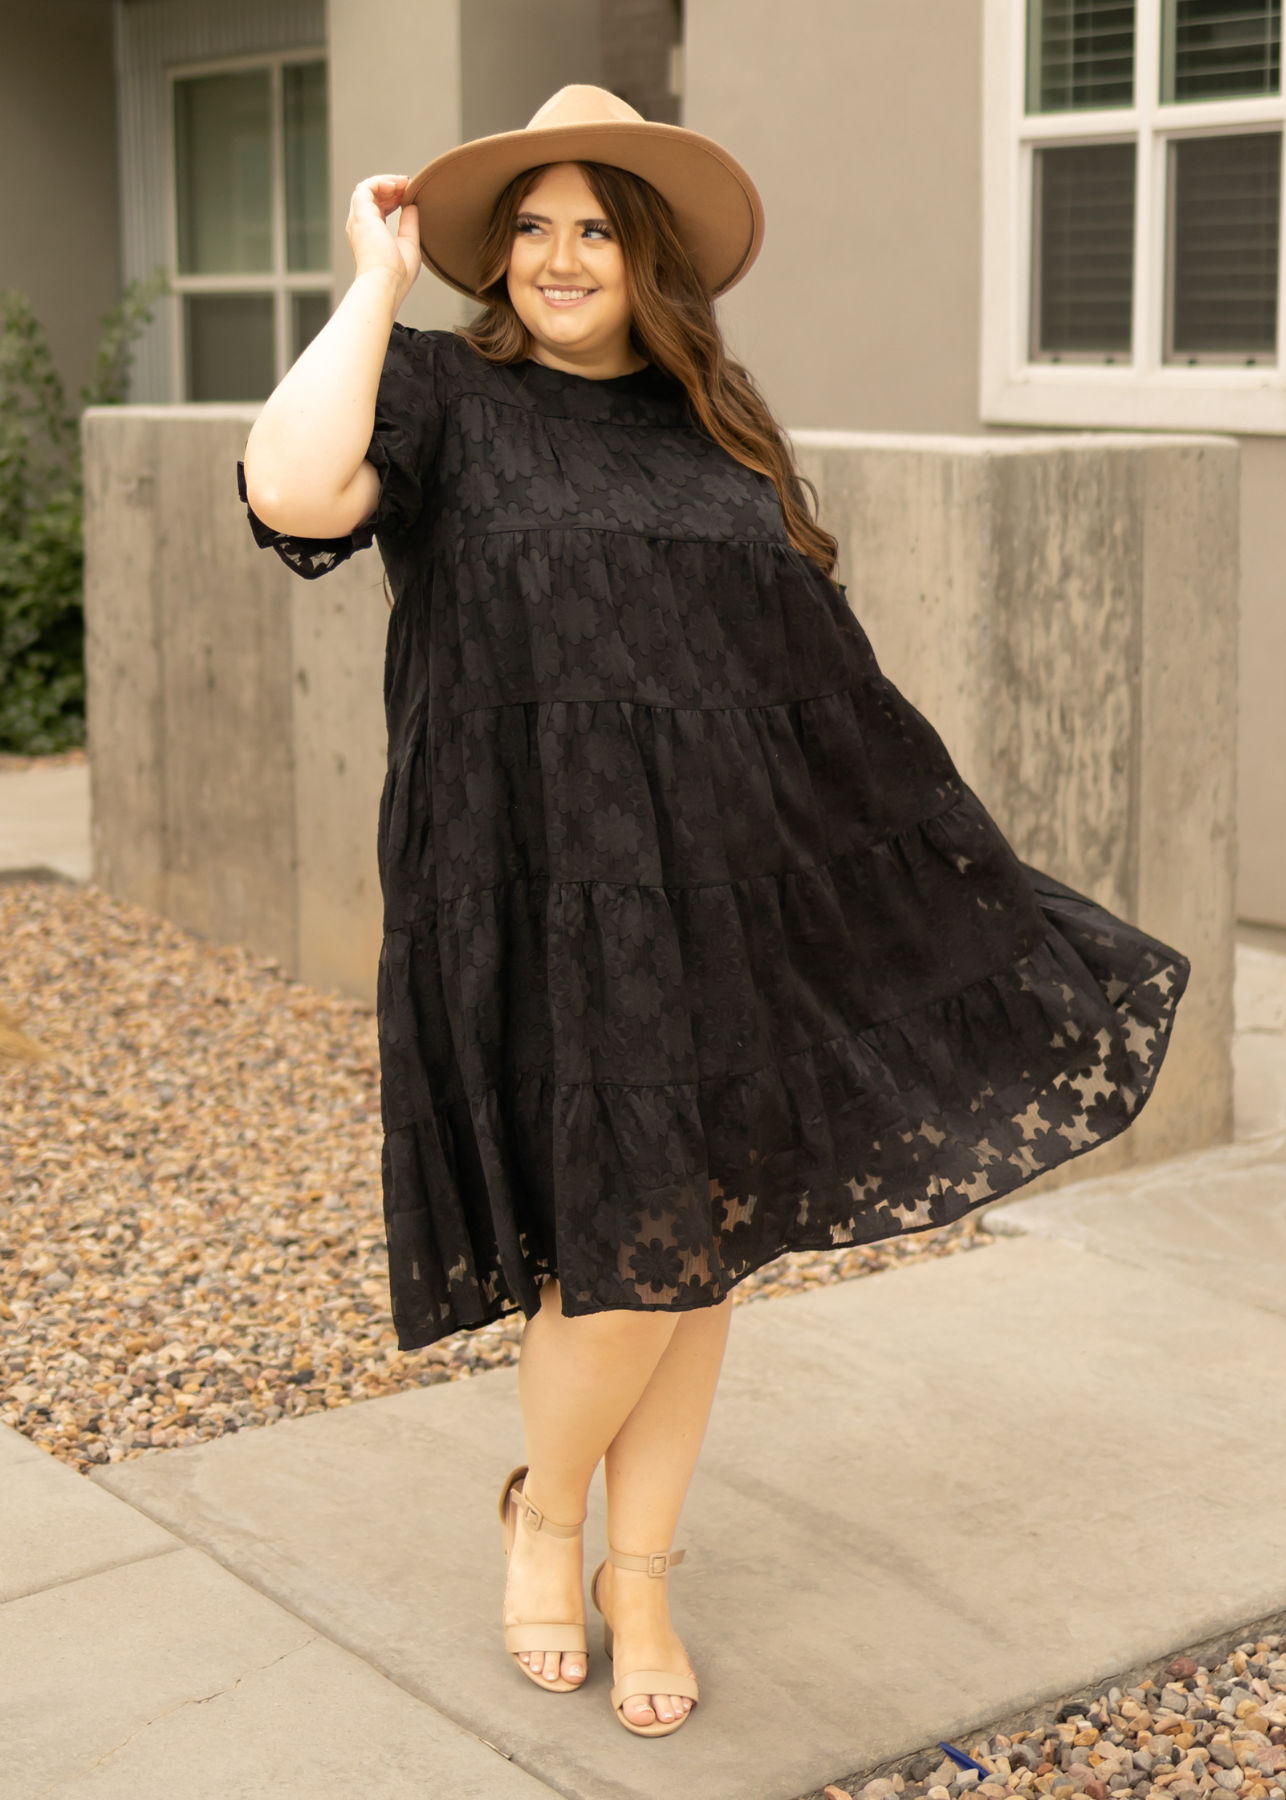 Short sleeve plus size black dress with black on black floral pattern